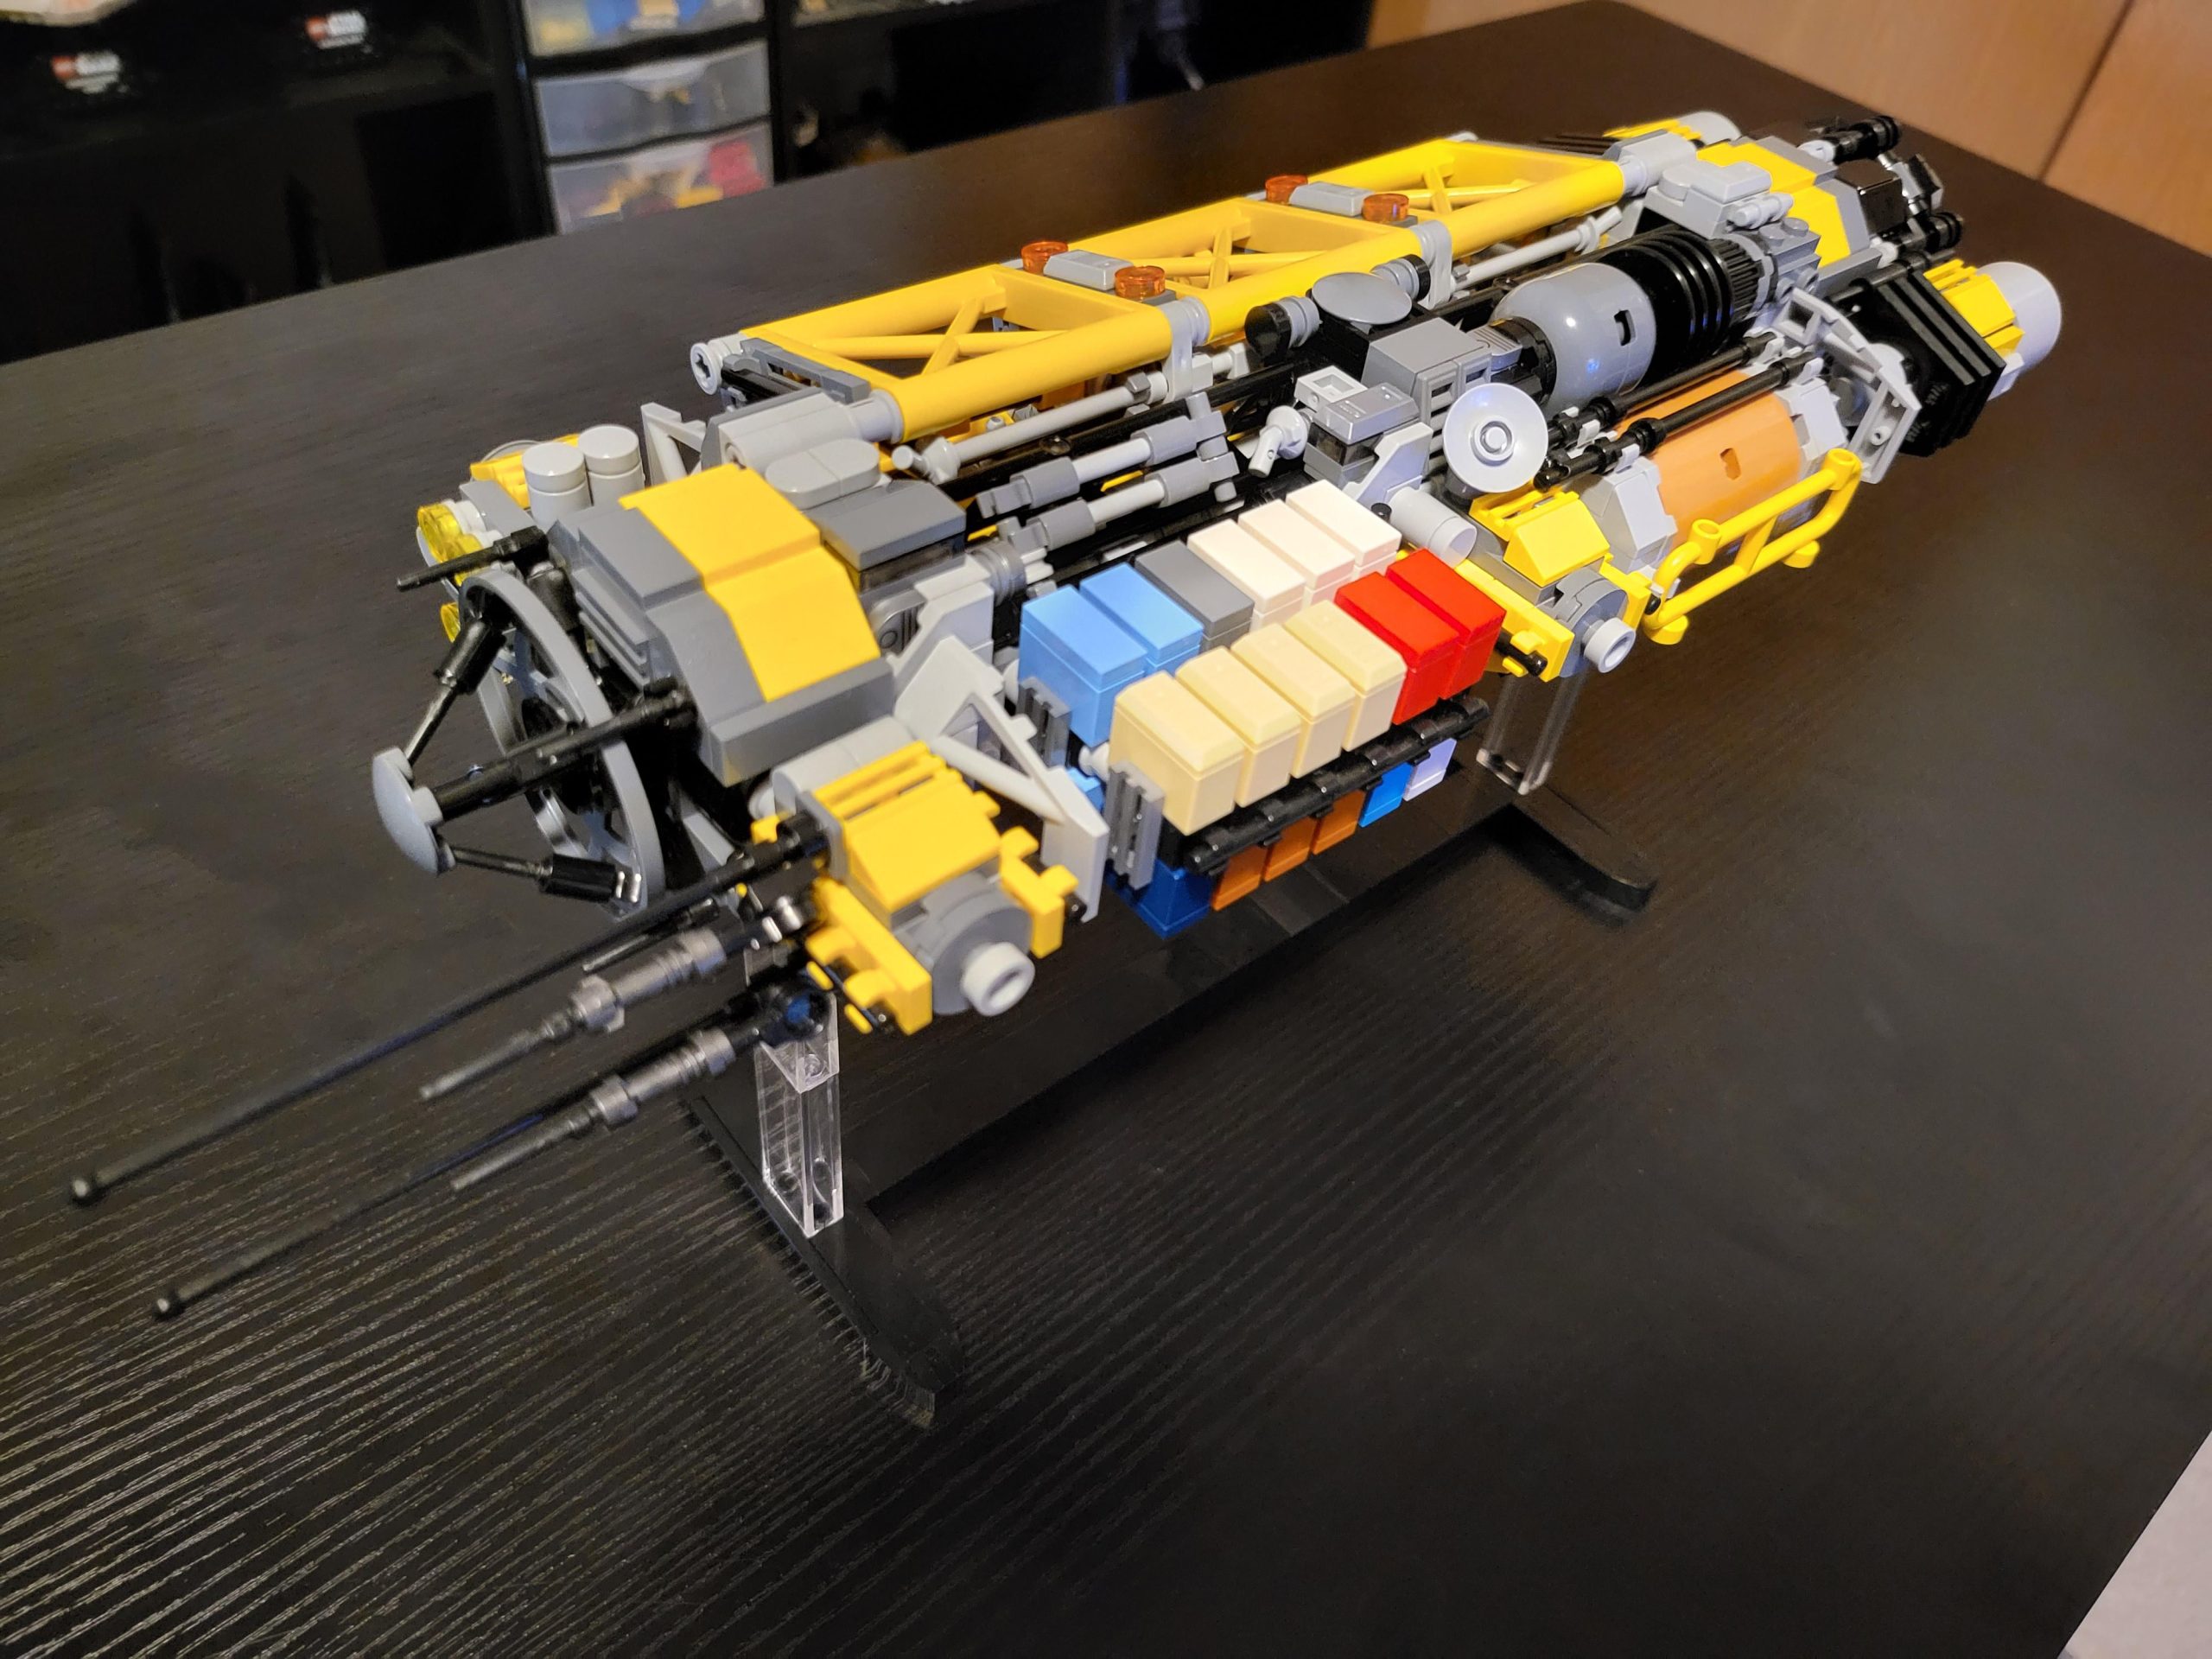 Lego microscale repair ship (MOC)